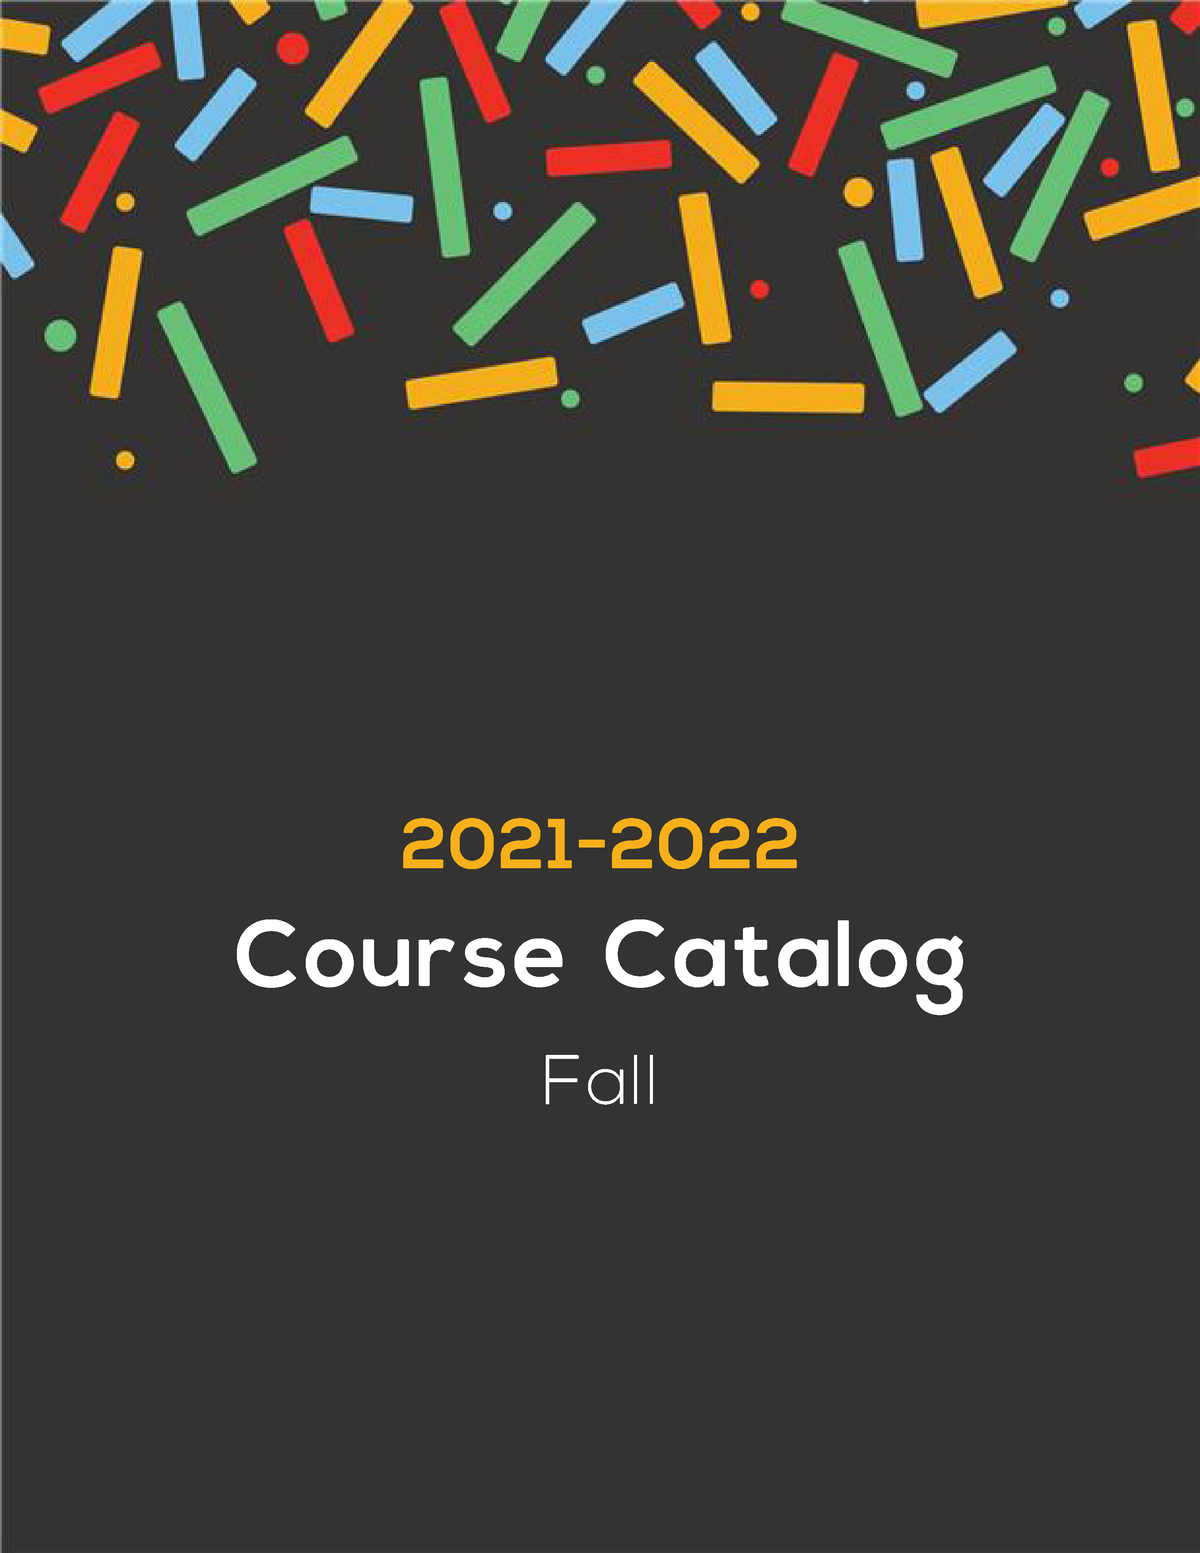 L4L High School 21 22 Course Catalog 2021 Course Catalog Fall 2021